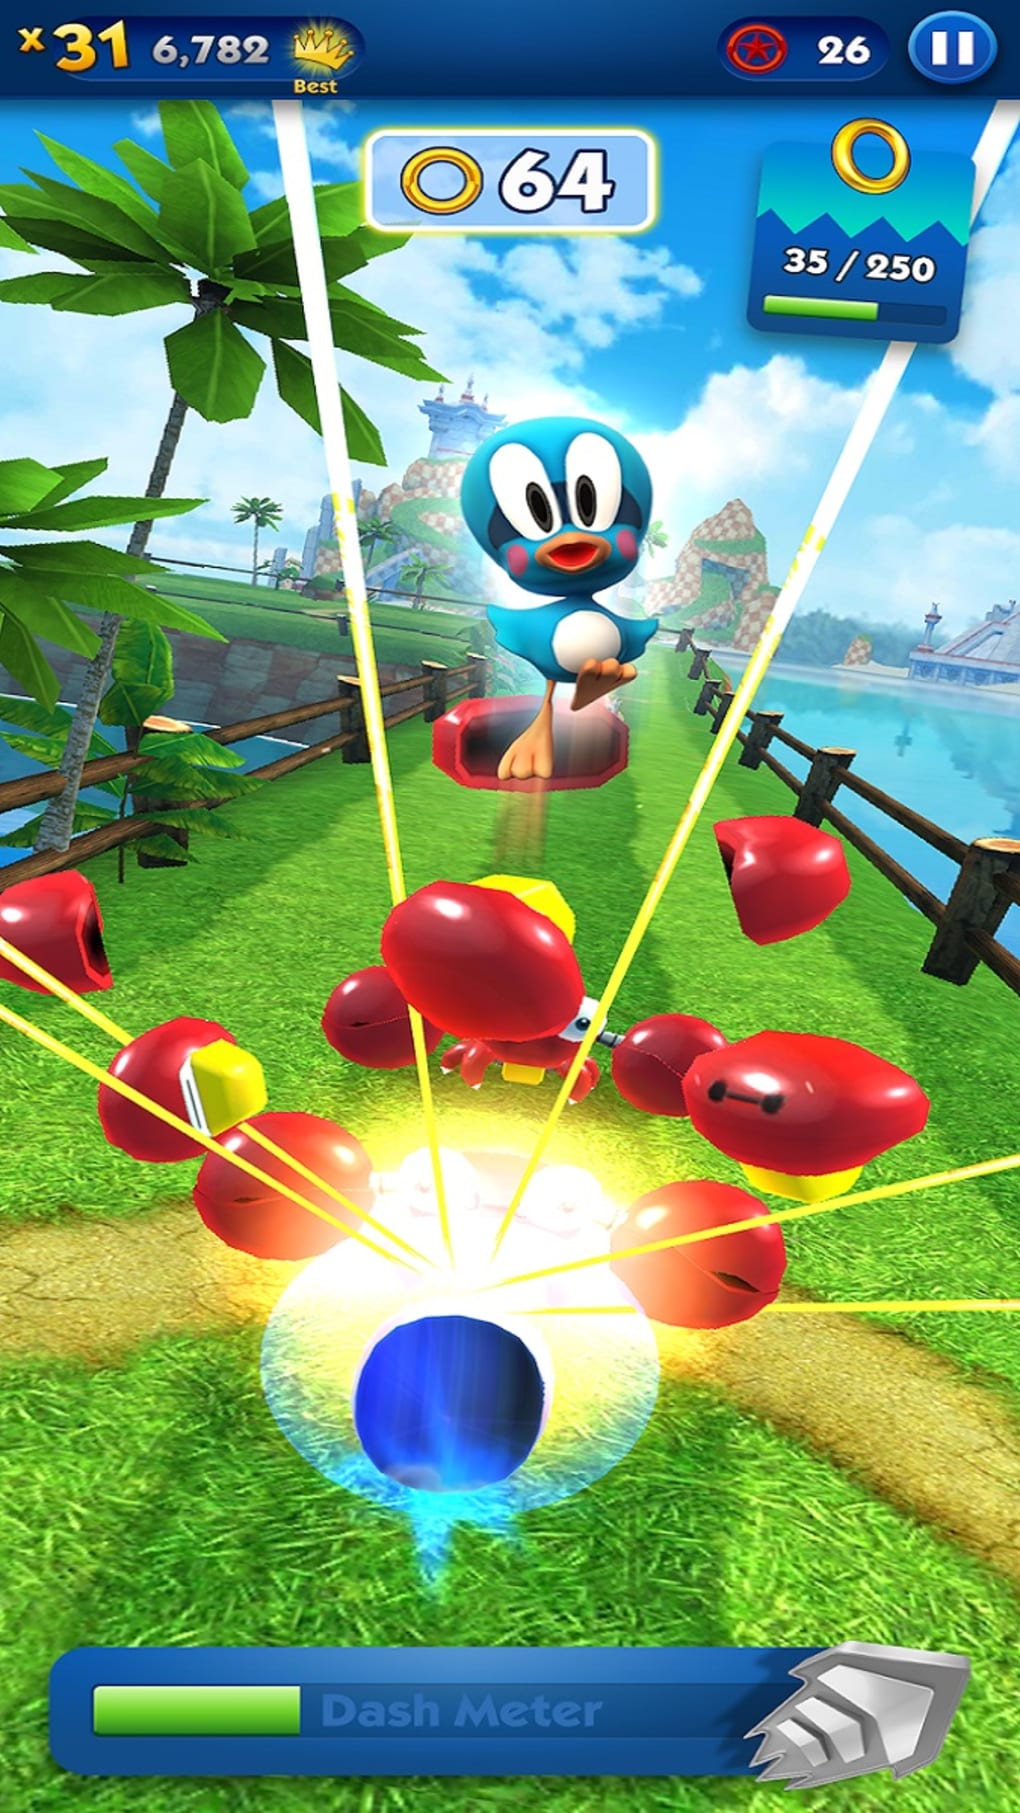 Play Sonic Dash Endless Running Racing Game online